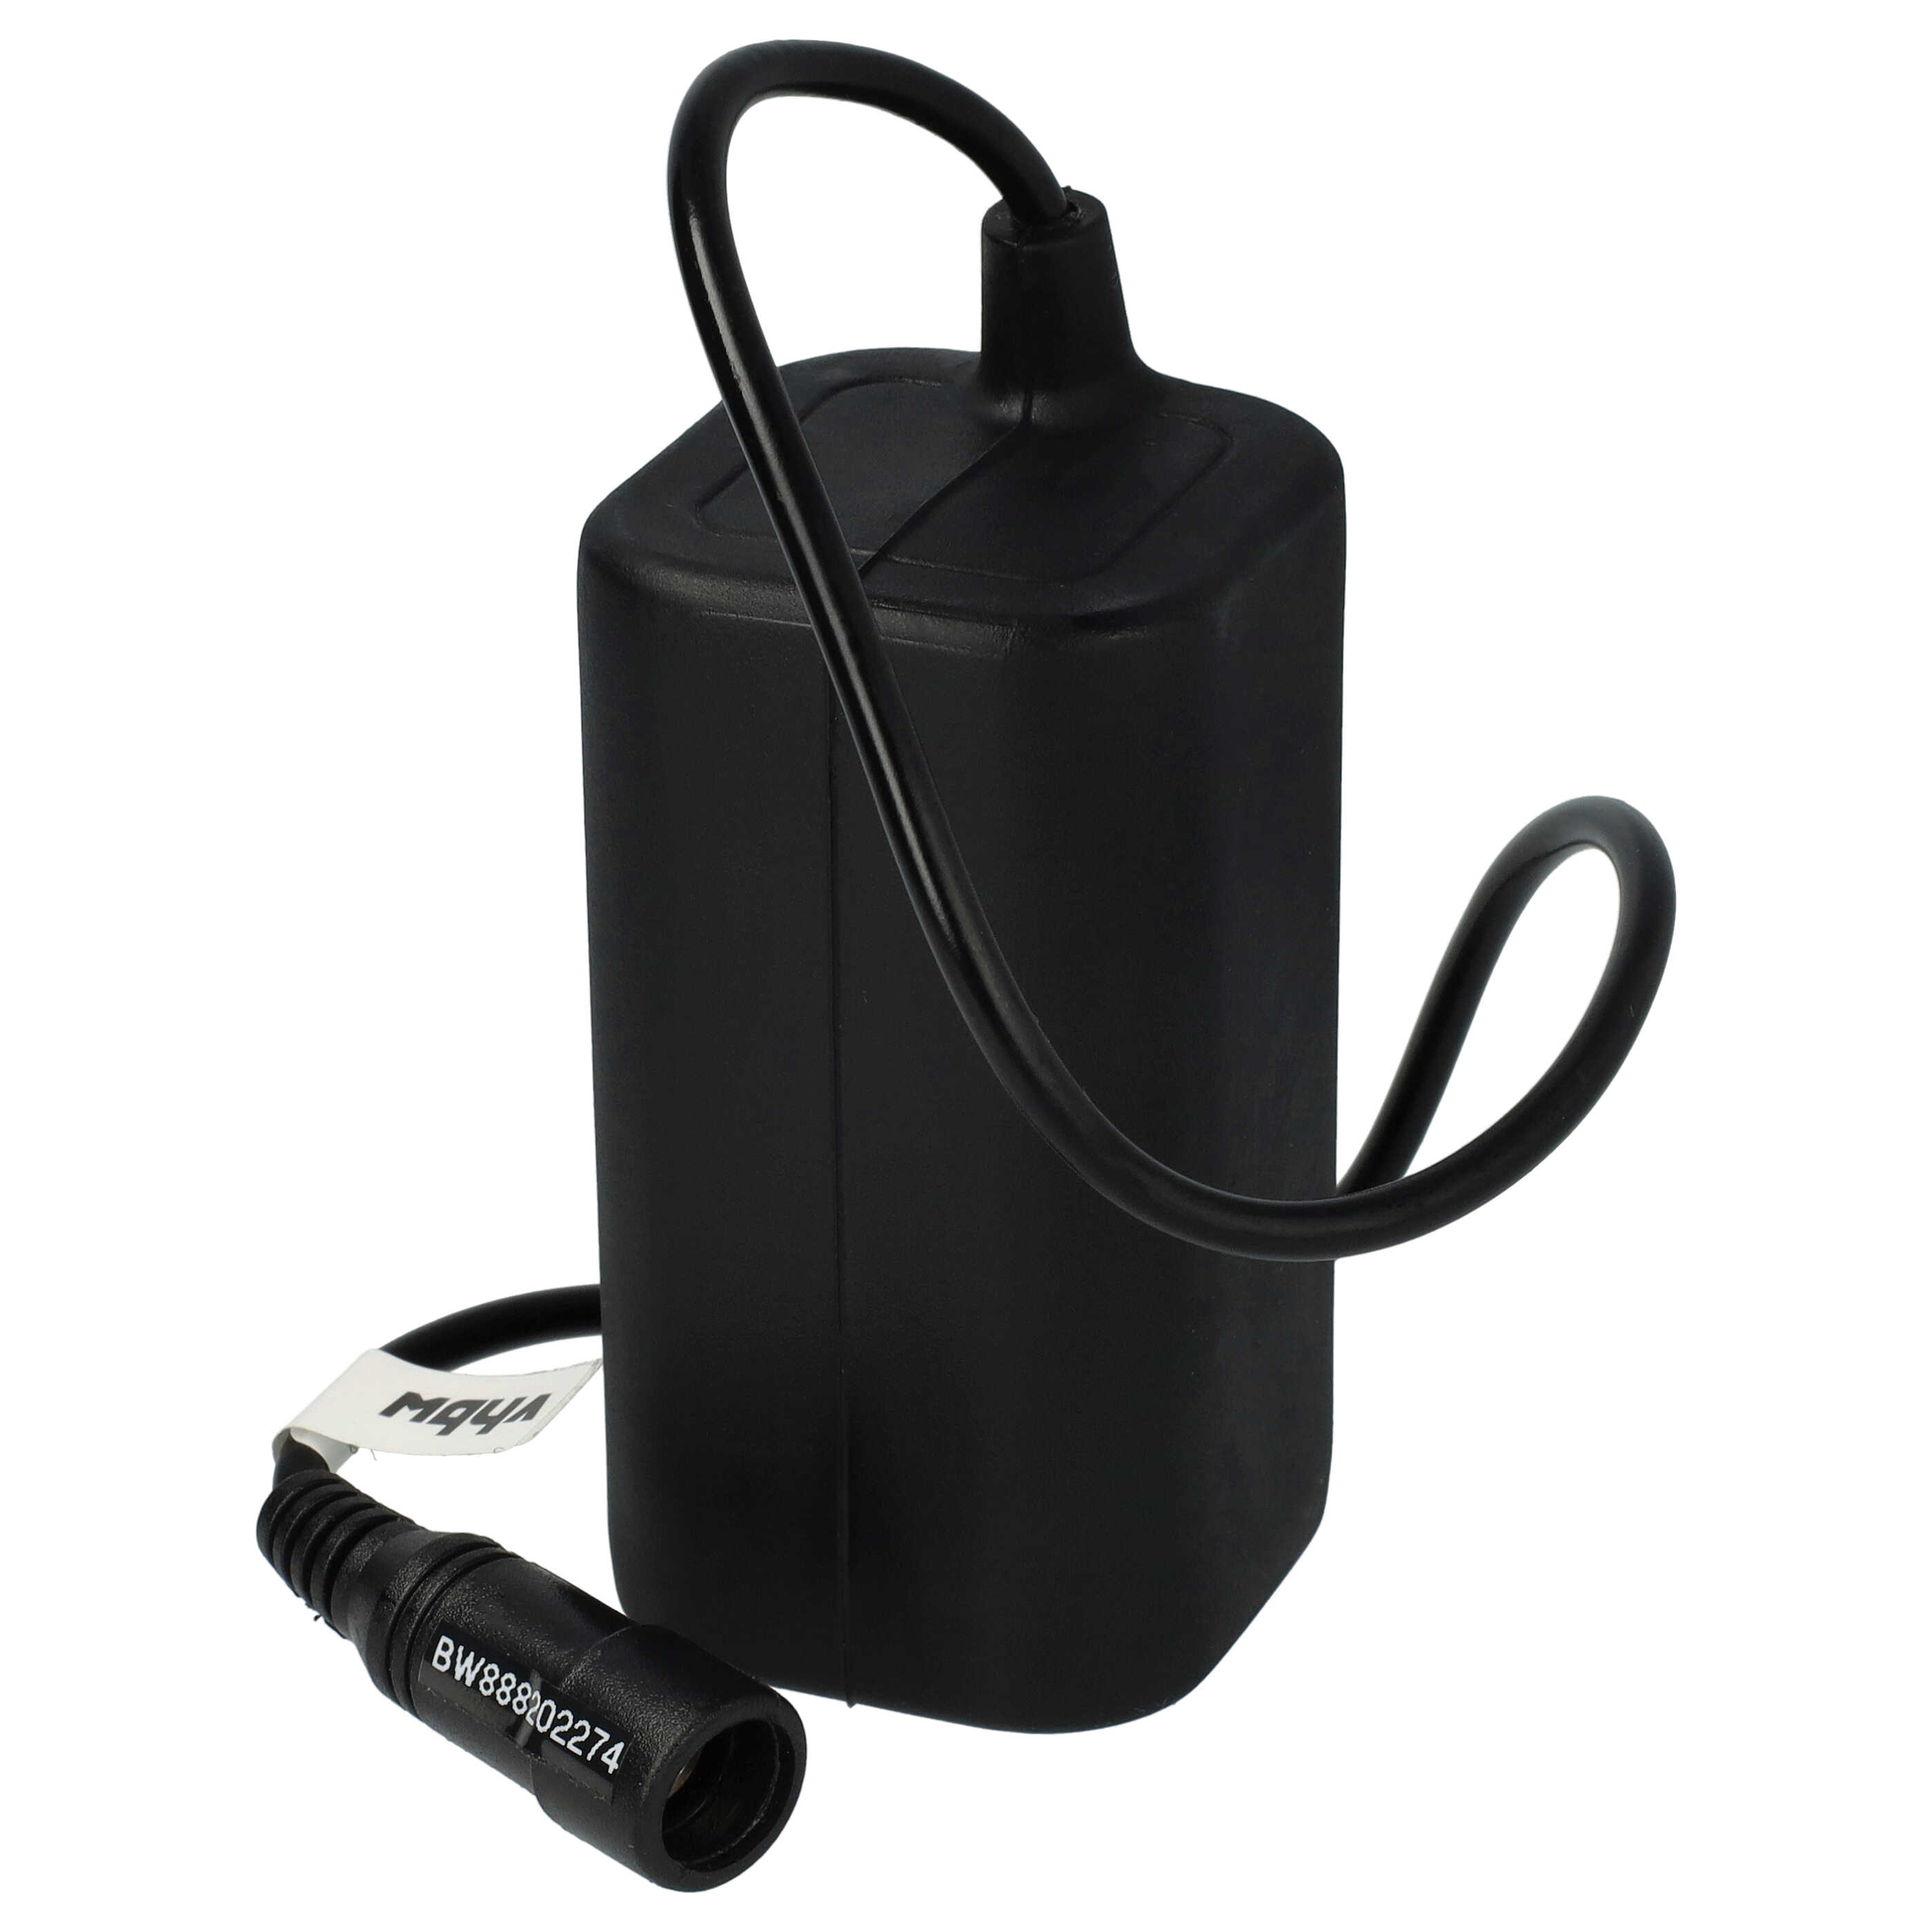 Batería + cargador para lámparas de bicicleta - 5200mAh 8,4V Li-Ion, impermeable